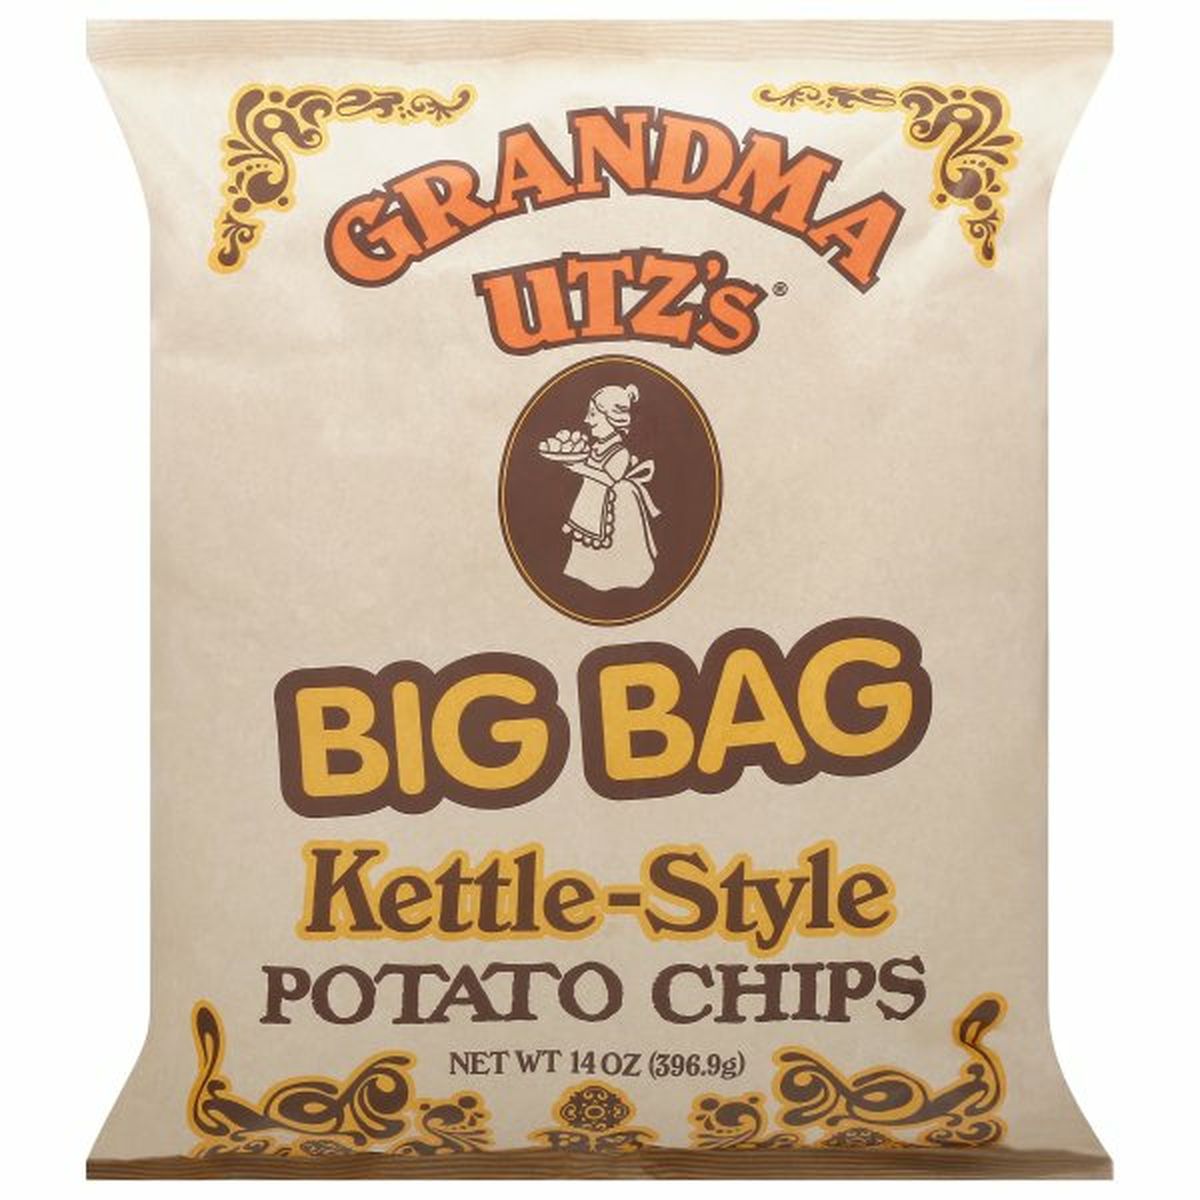 Calories in Grandma Utz's Potato Chips, Kettle-Style, Big Bag